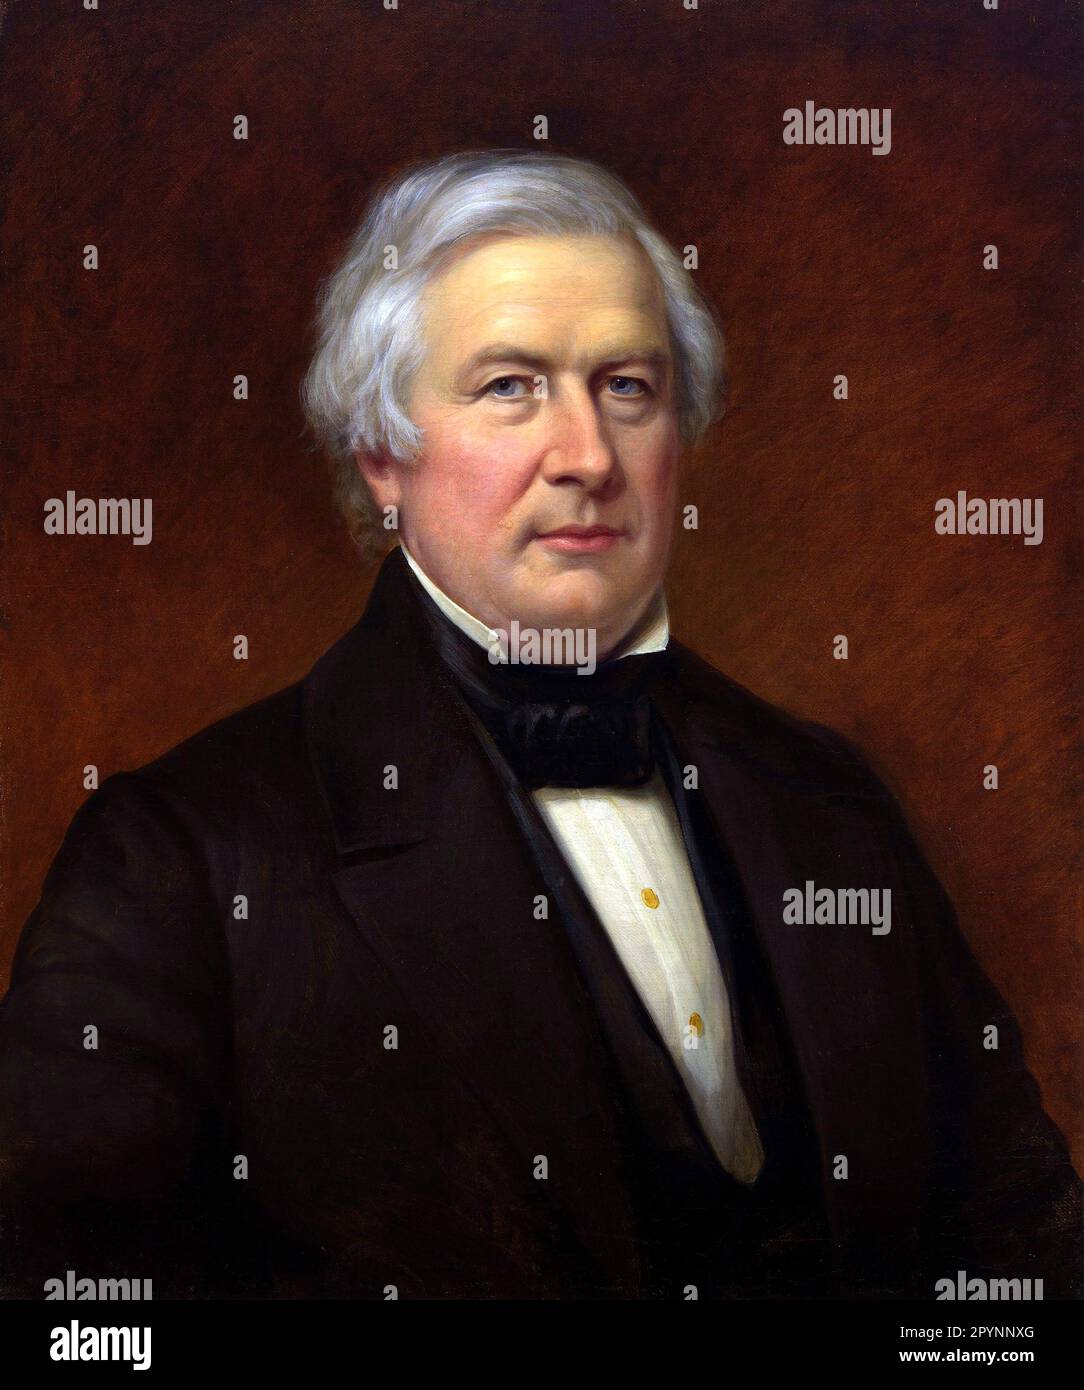 Millard Fillmore. Portrait of the 13th President of the United States, Millard Fillmore (1800-1874) Stock Photo